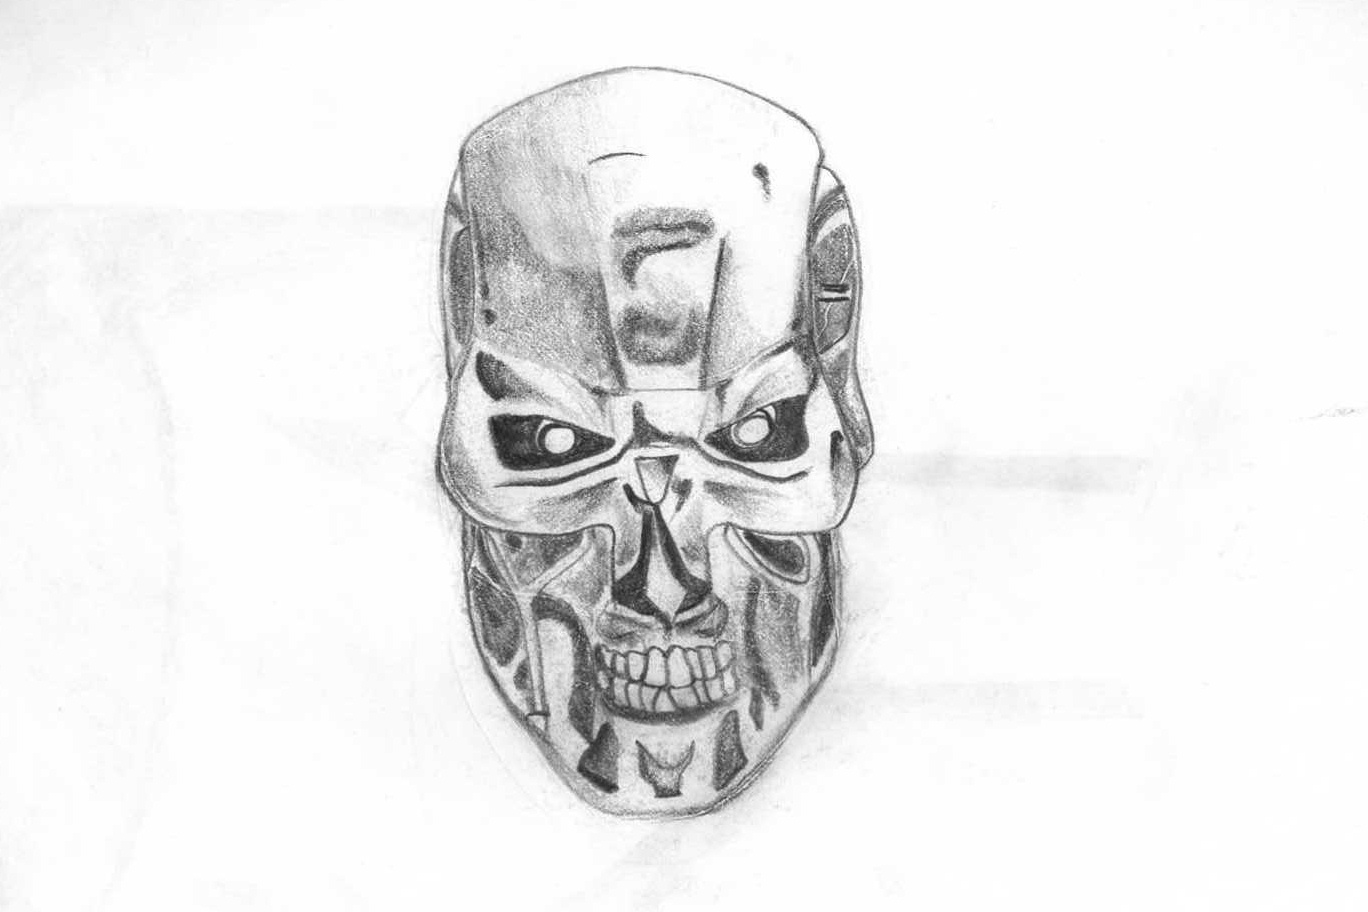 Terminator Skull by Mrdizzyreed99